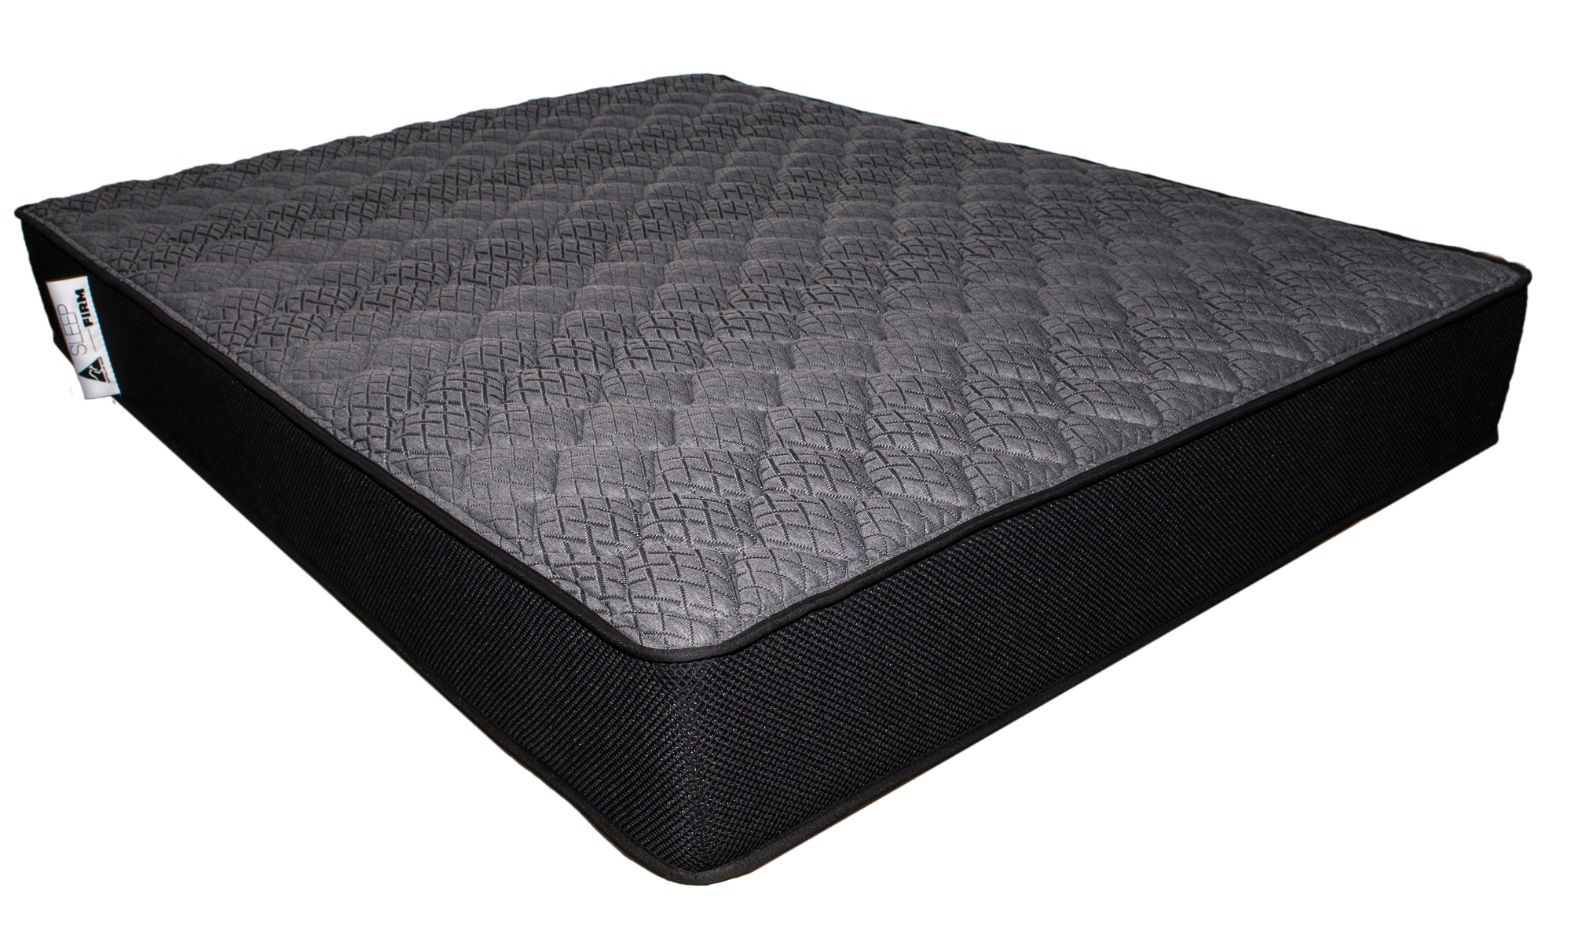 sleep firm mattress fantastic furniture